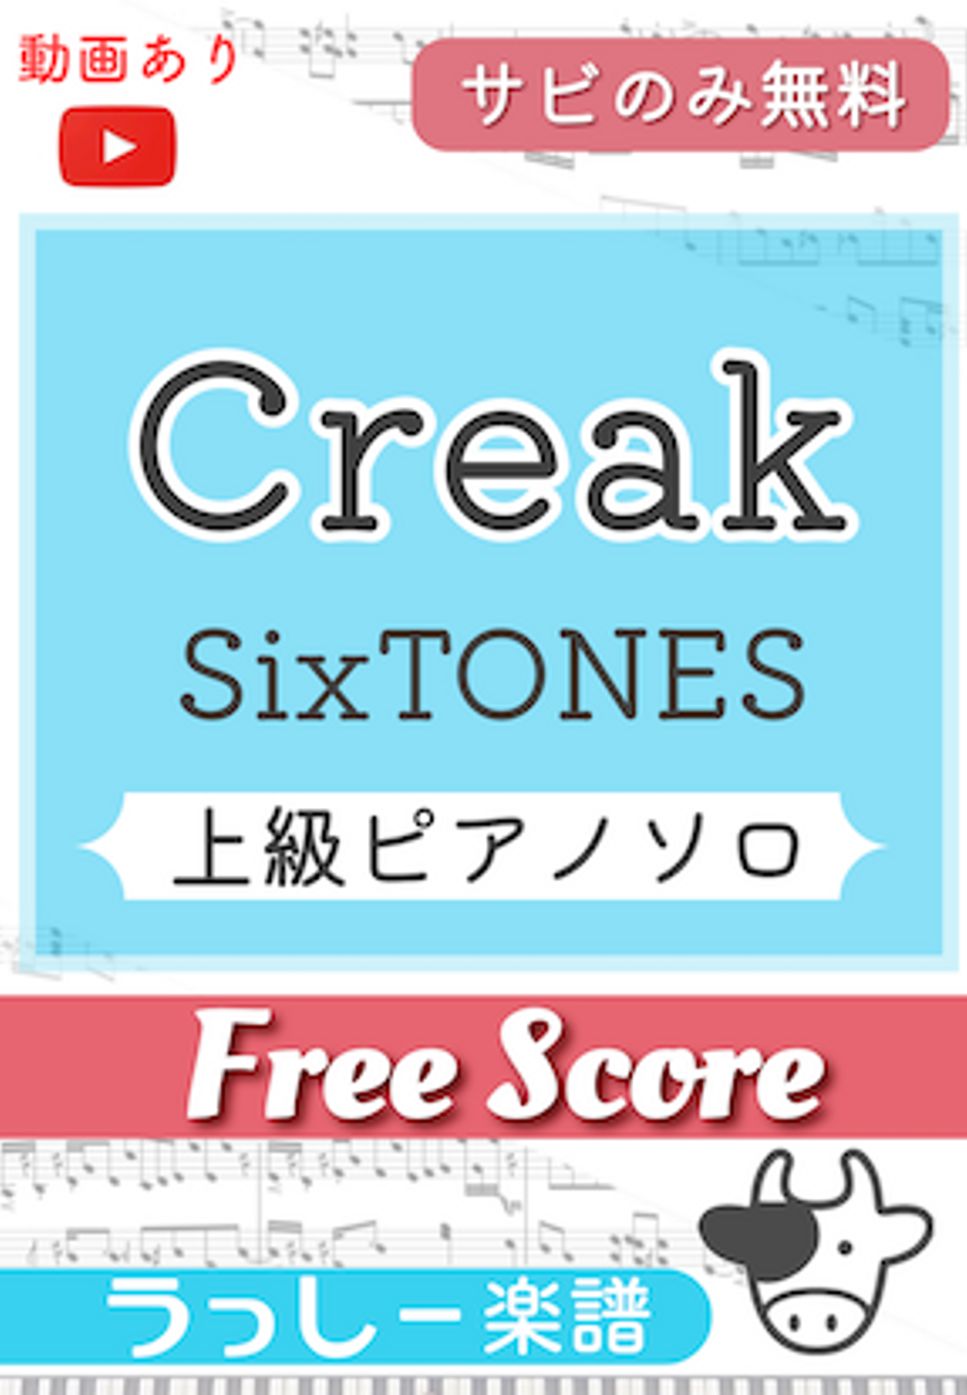 SixTONES - Creak (サビのみ無料) by 牛武奏人